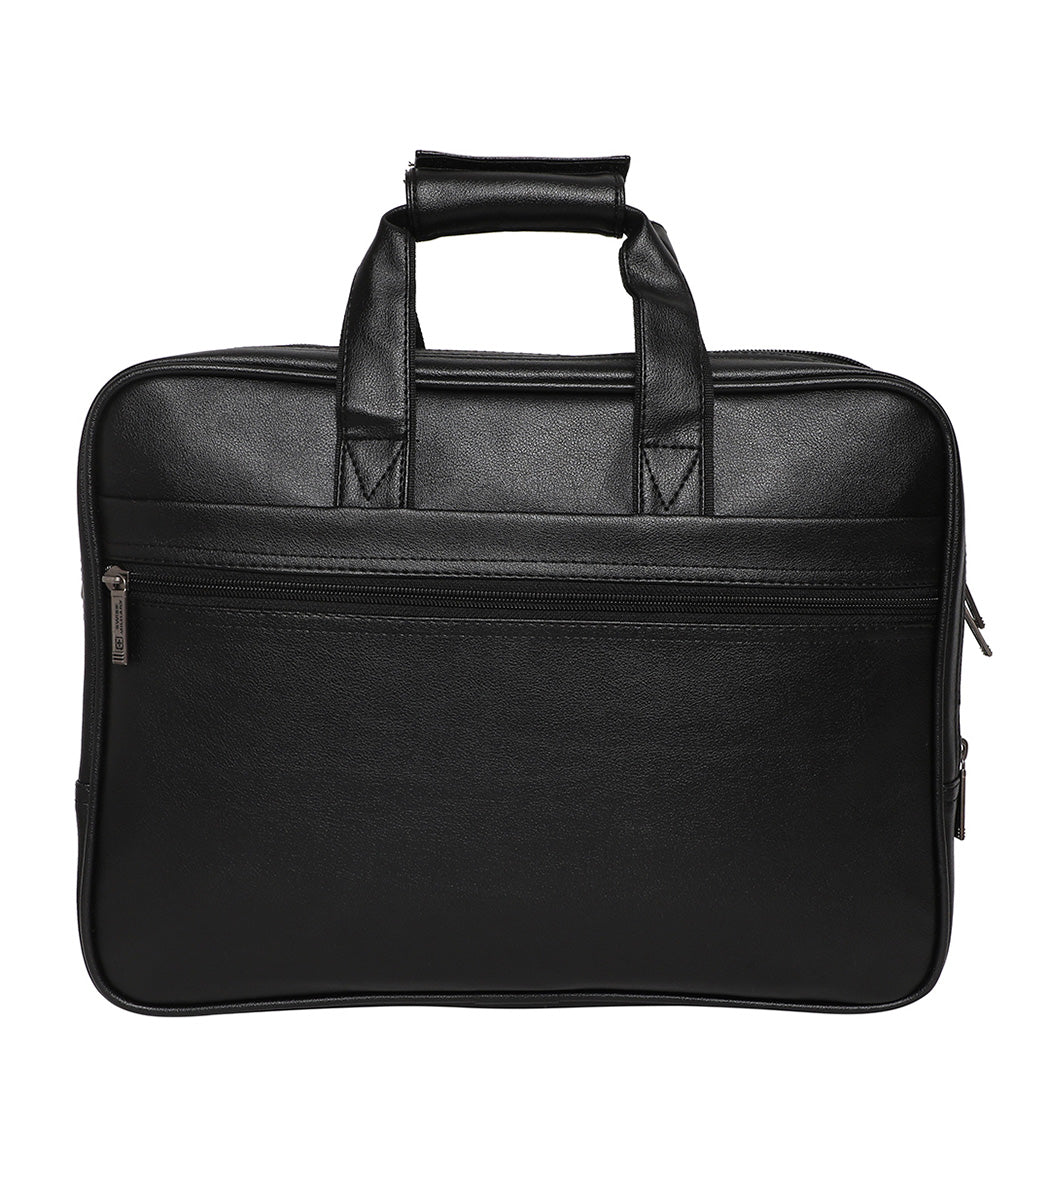 Swiss Military Premium Leatherette Laptop Sling Bag